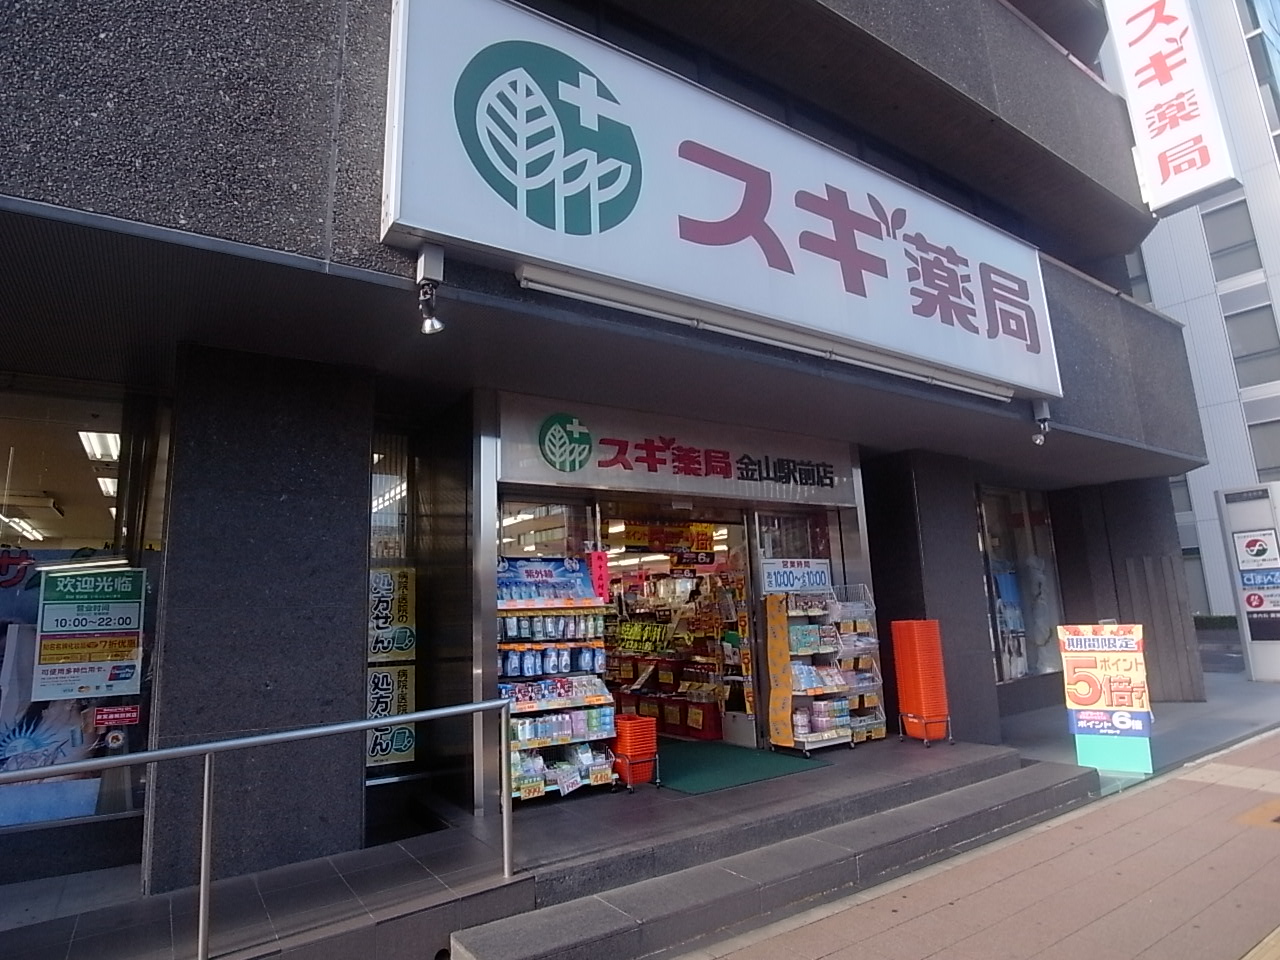 Dorakkusutoa. Cedar pharmacy Kanayama Station shop 317m until (drugstore)